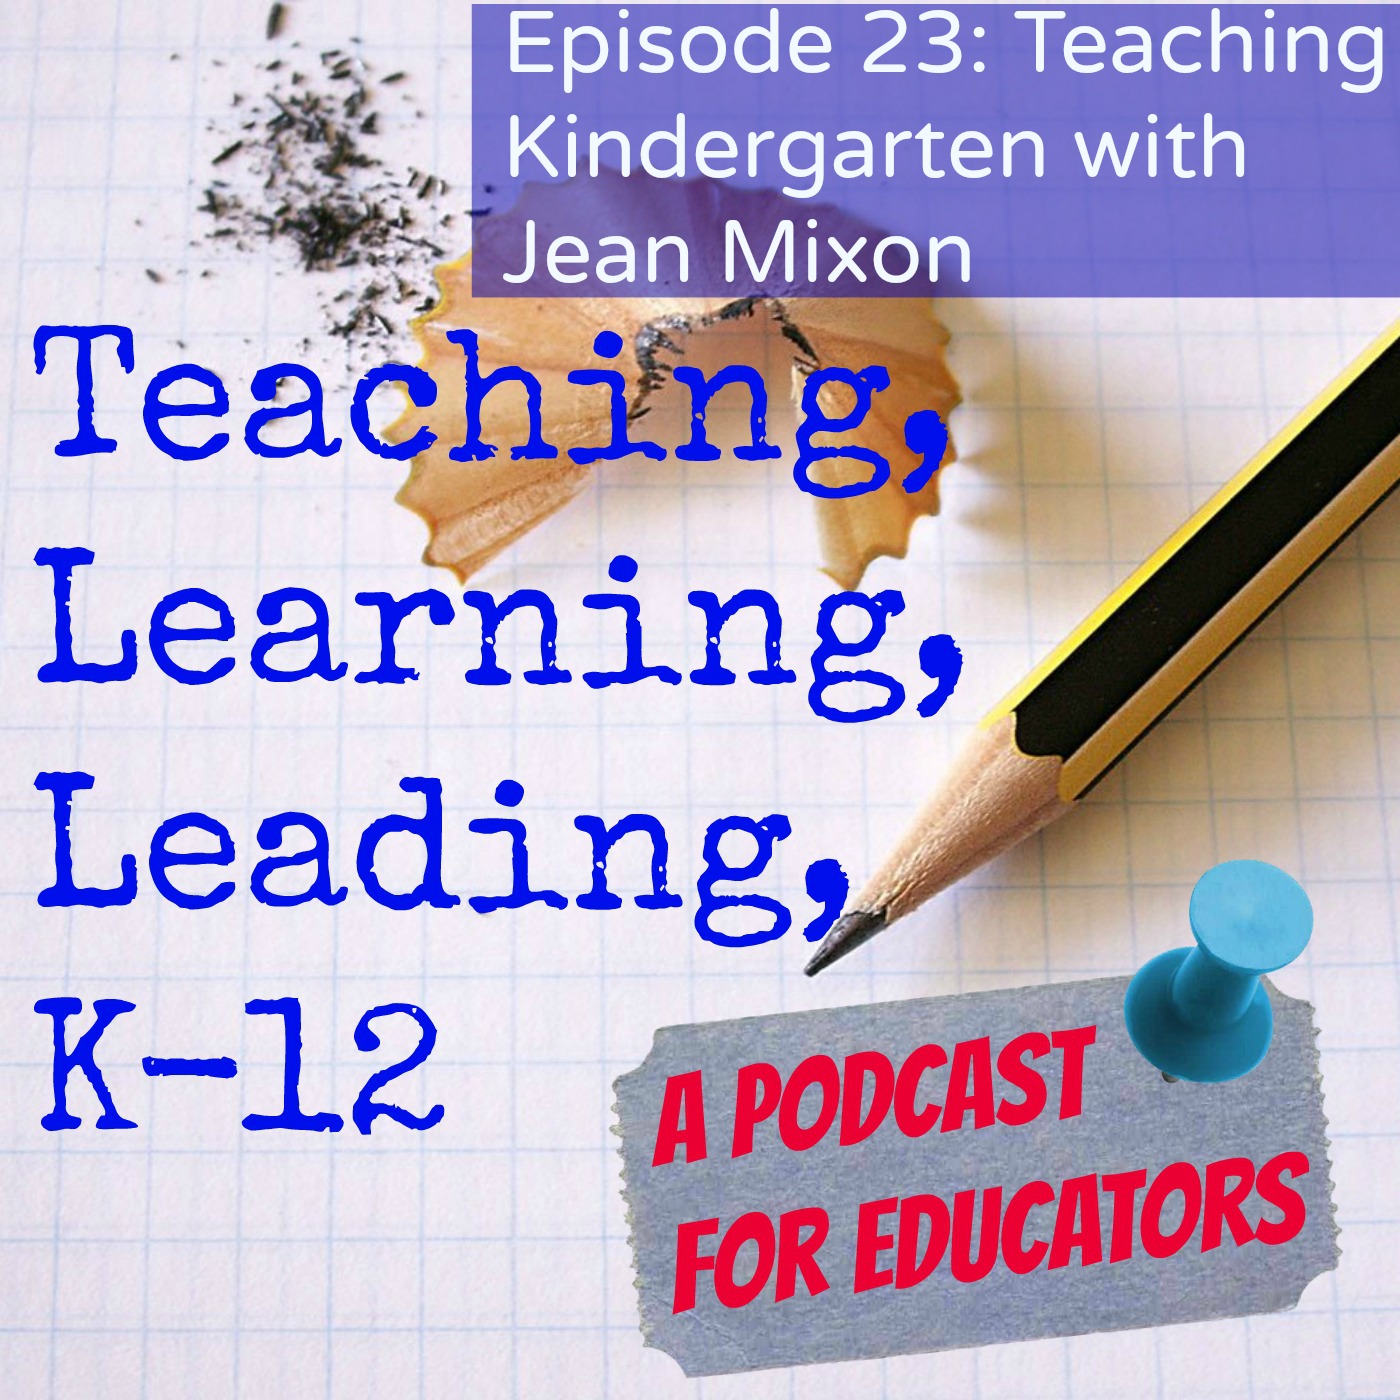 Episode 23: Teaching Kindergarten with Jean Mixon